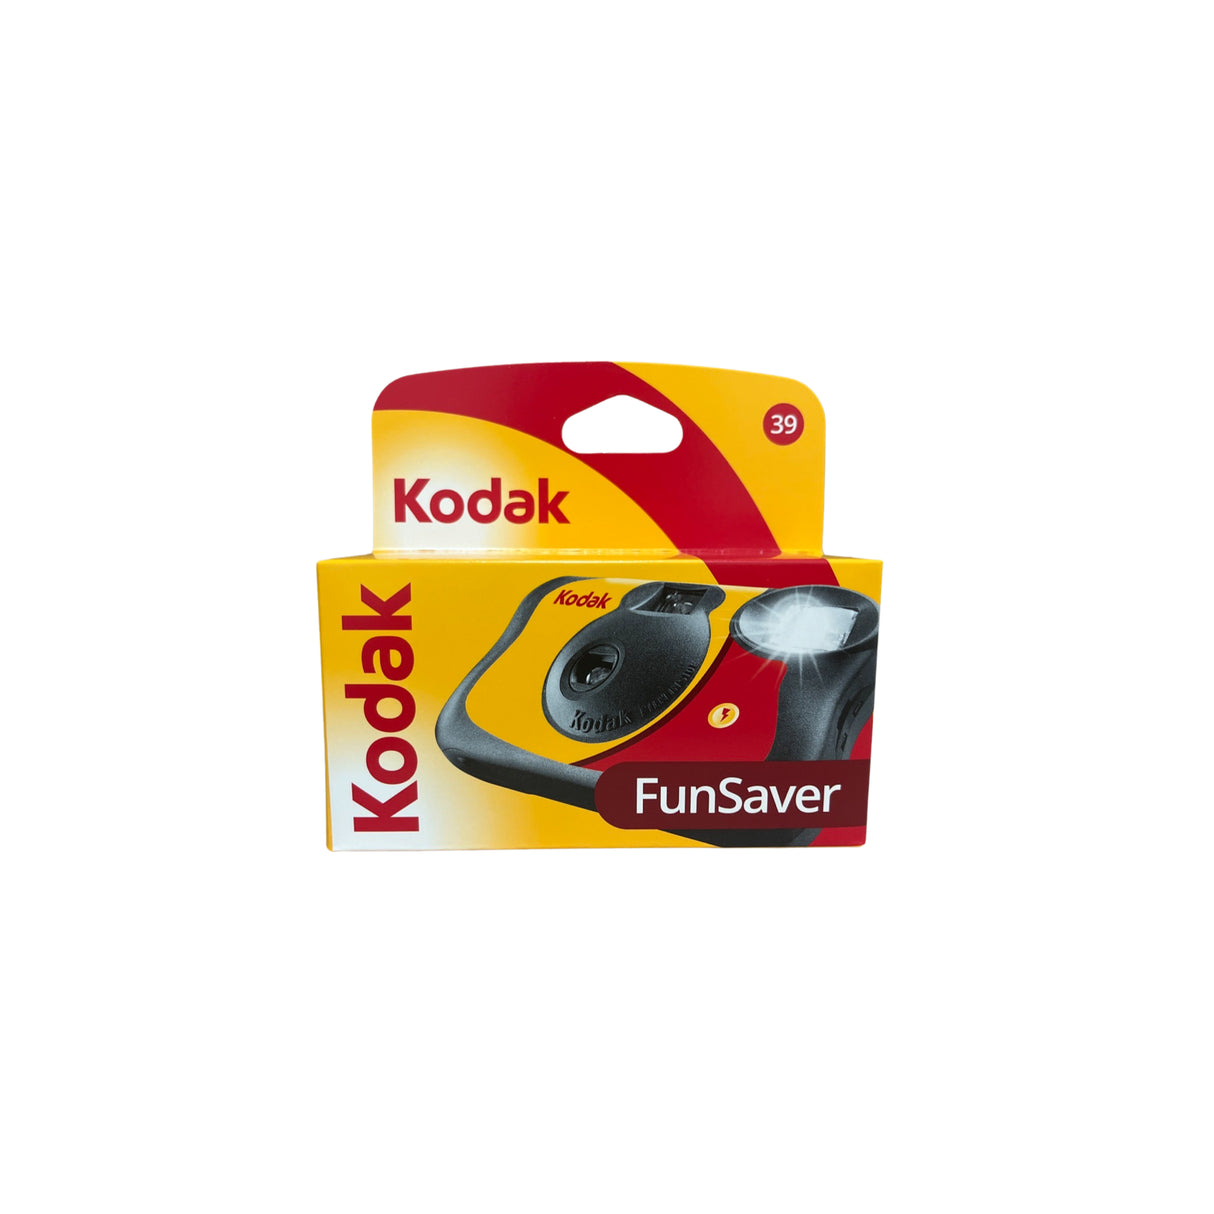 Kodak FunSaver single use camera